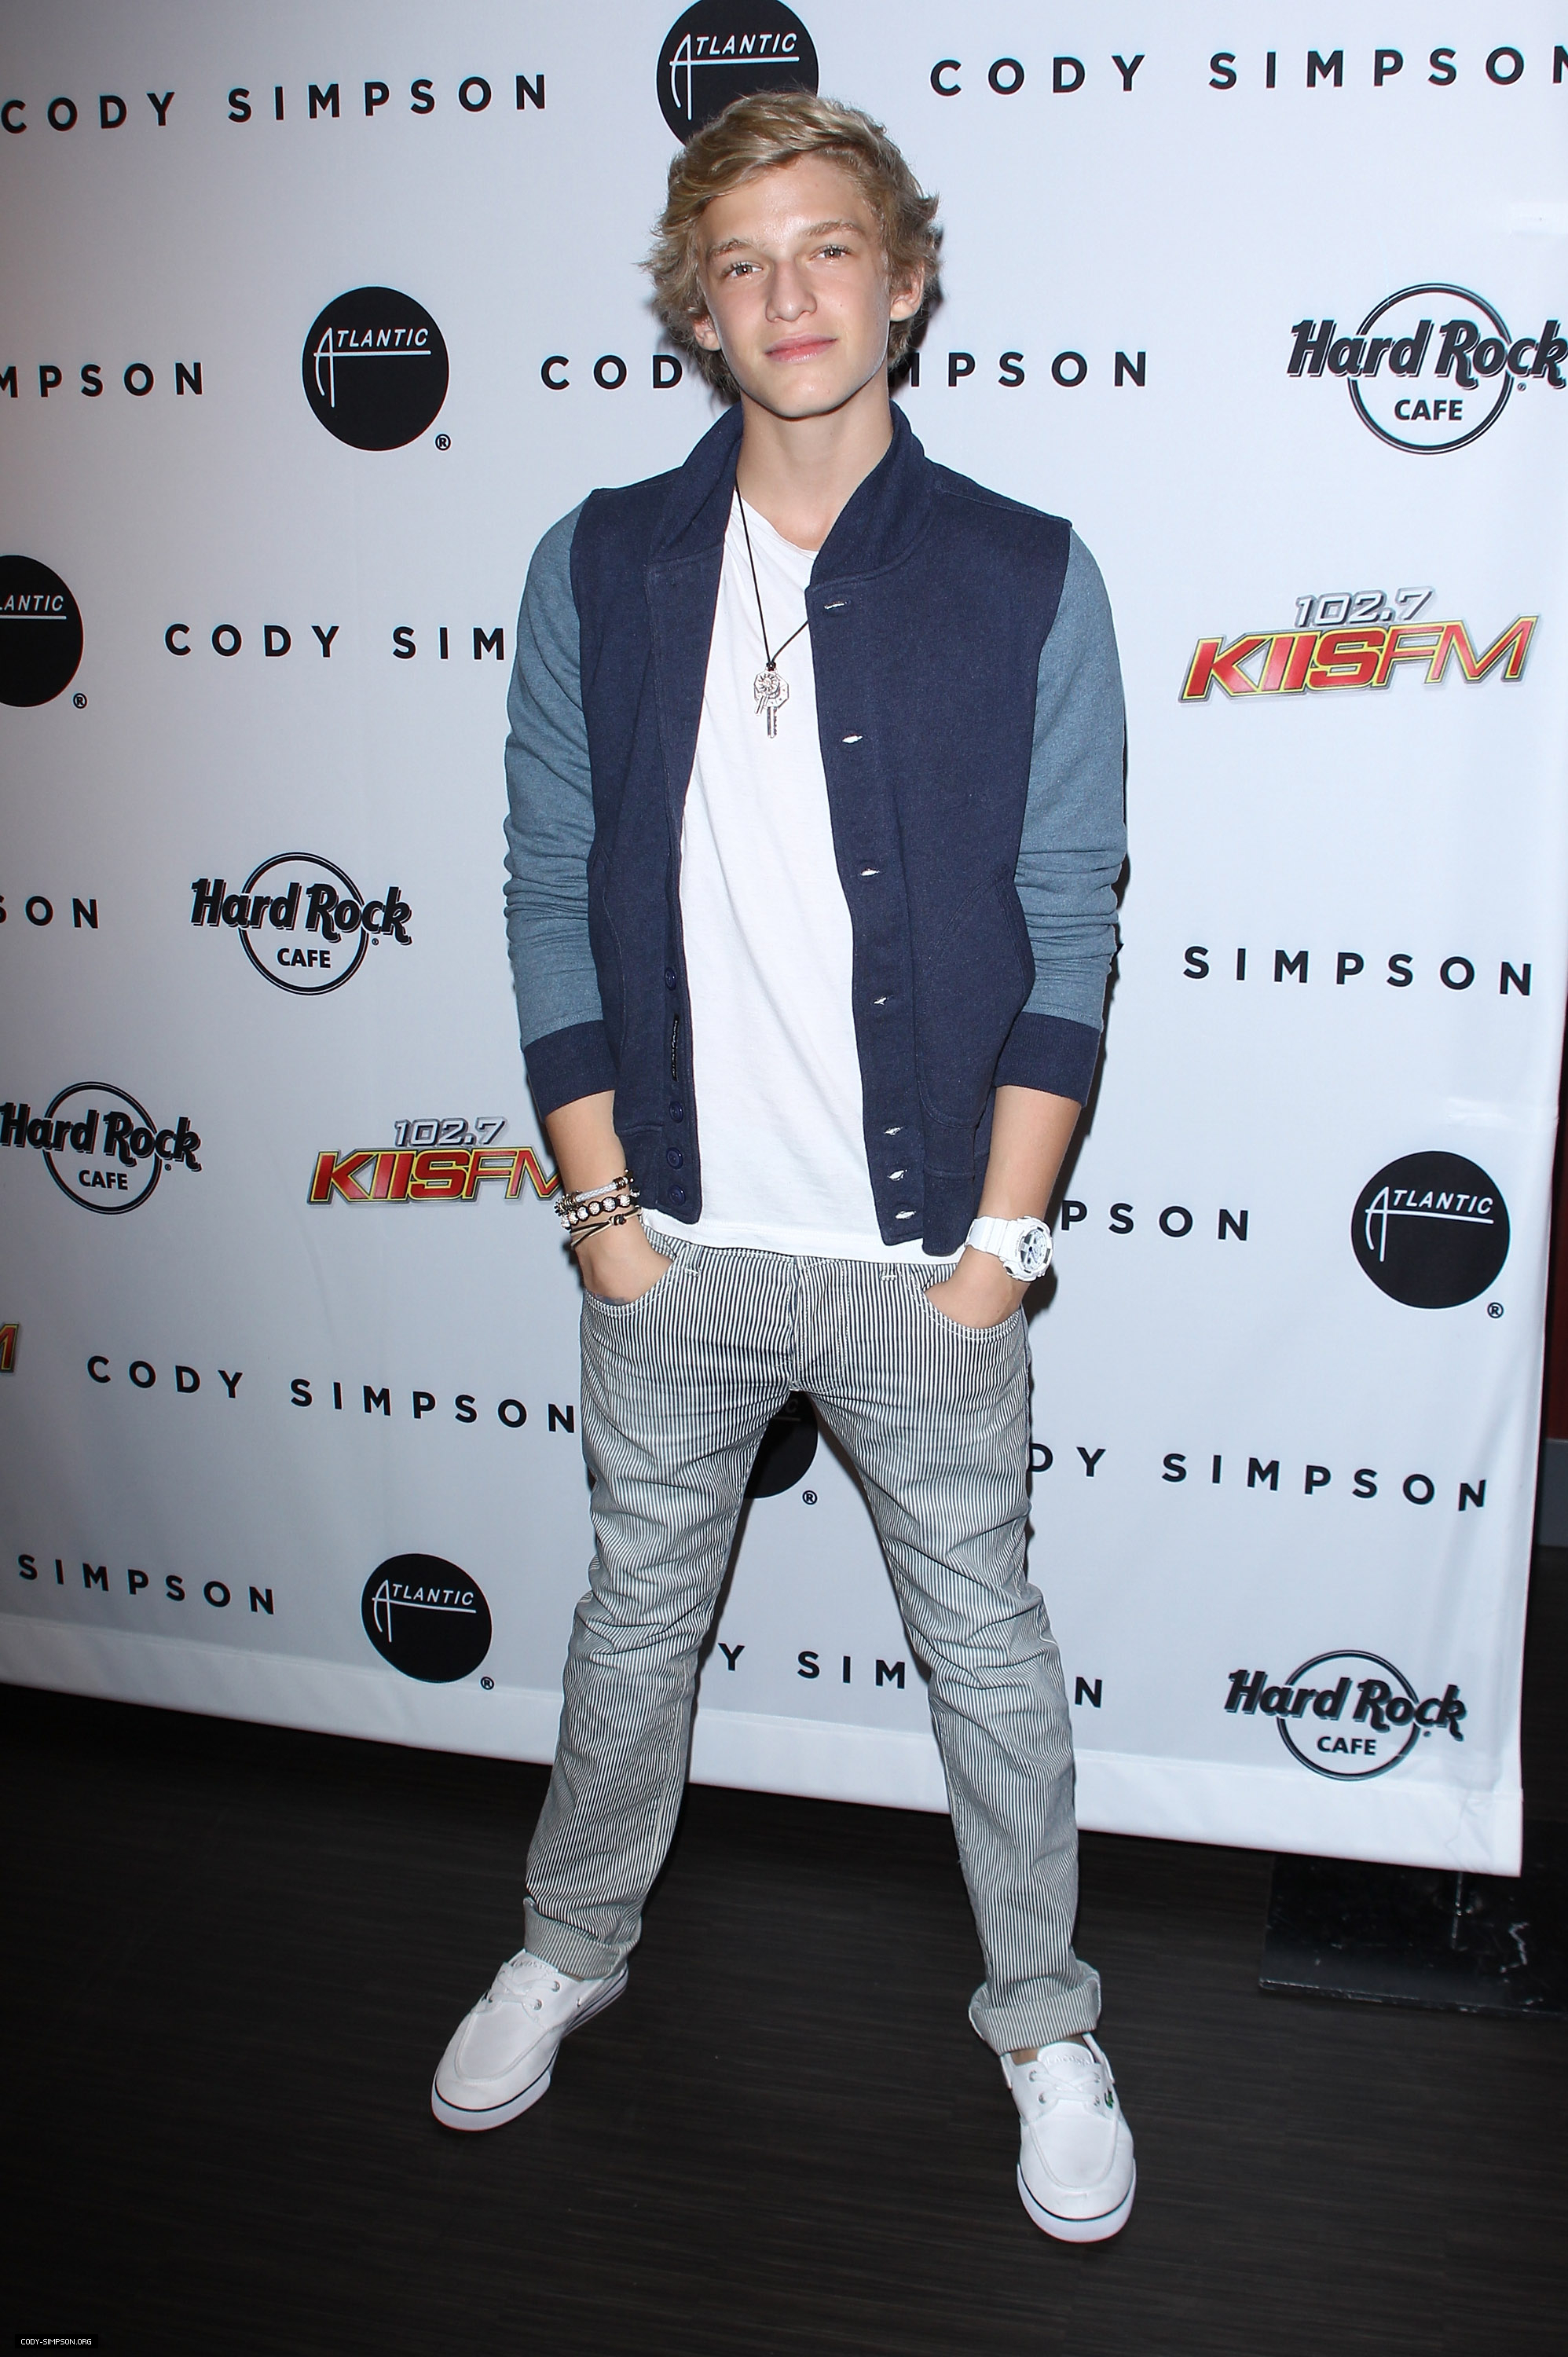 General photo of Cody Simpson